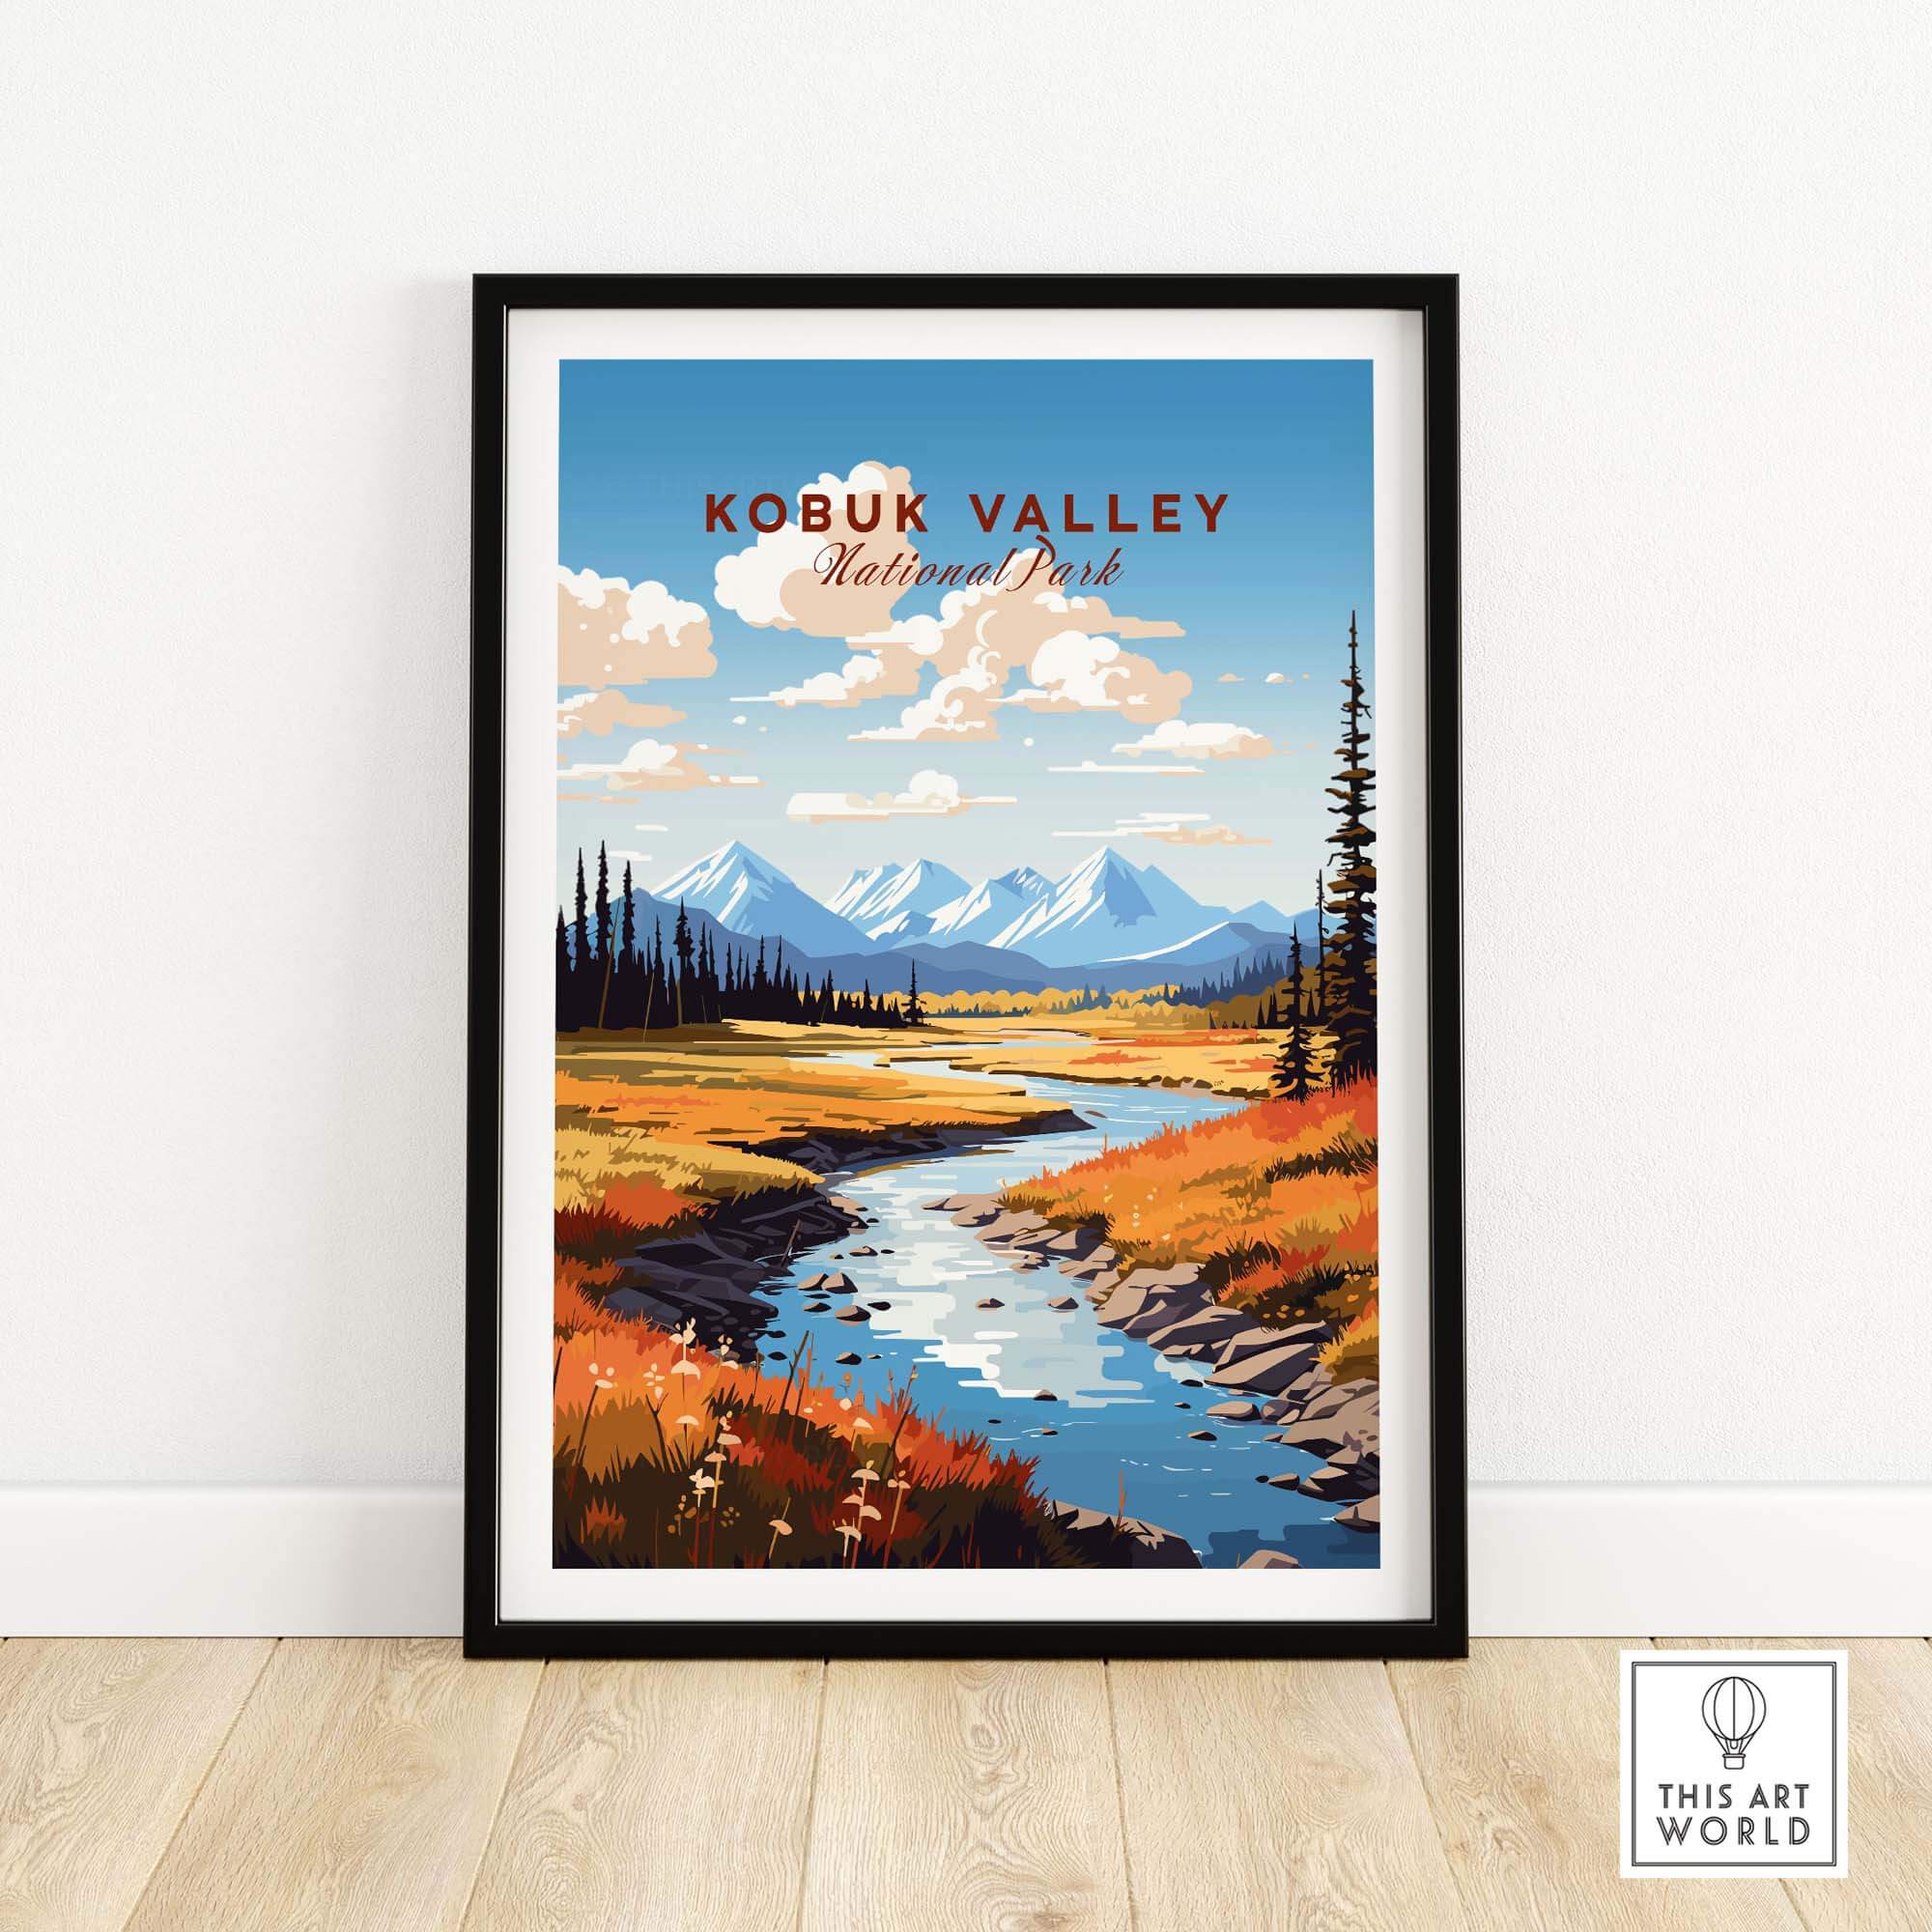 Kobuk Valley National Park Poster